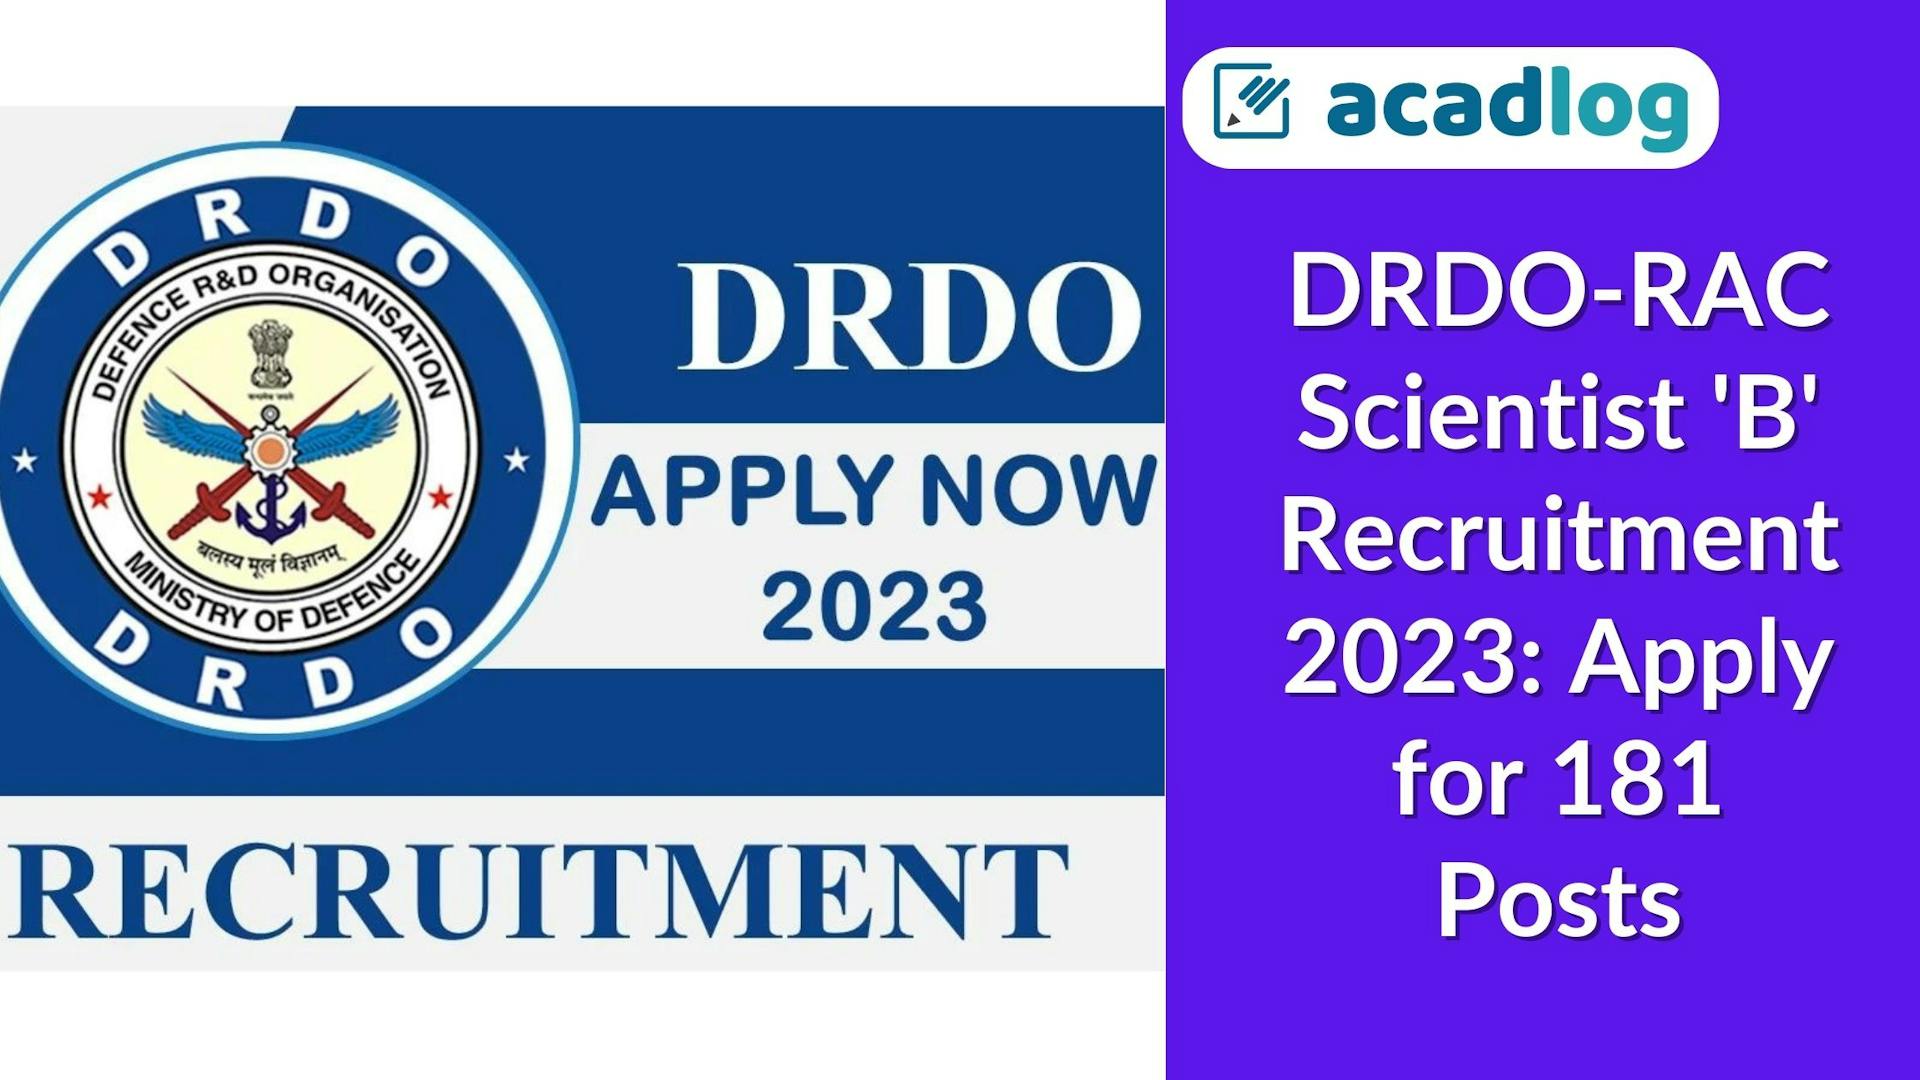 DRDO-RAC Scientist B Recruitment 2023: Apply for 181 Posts